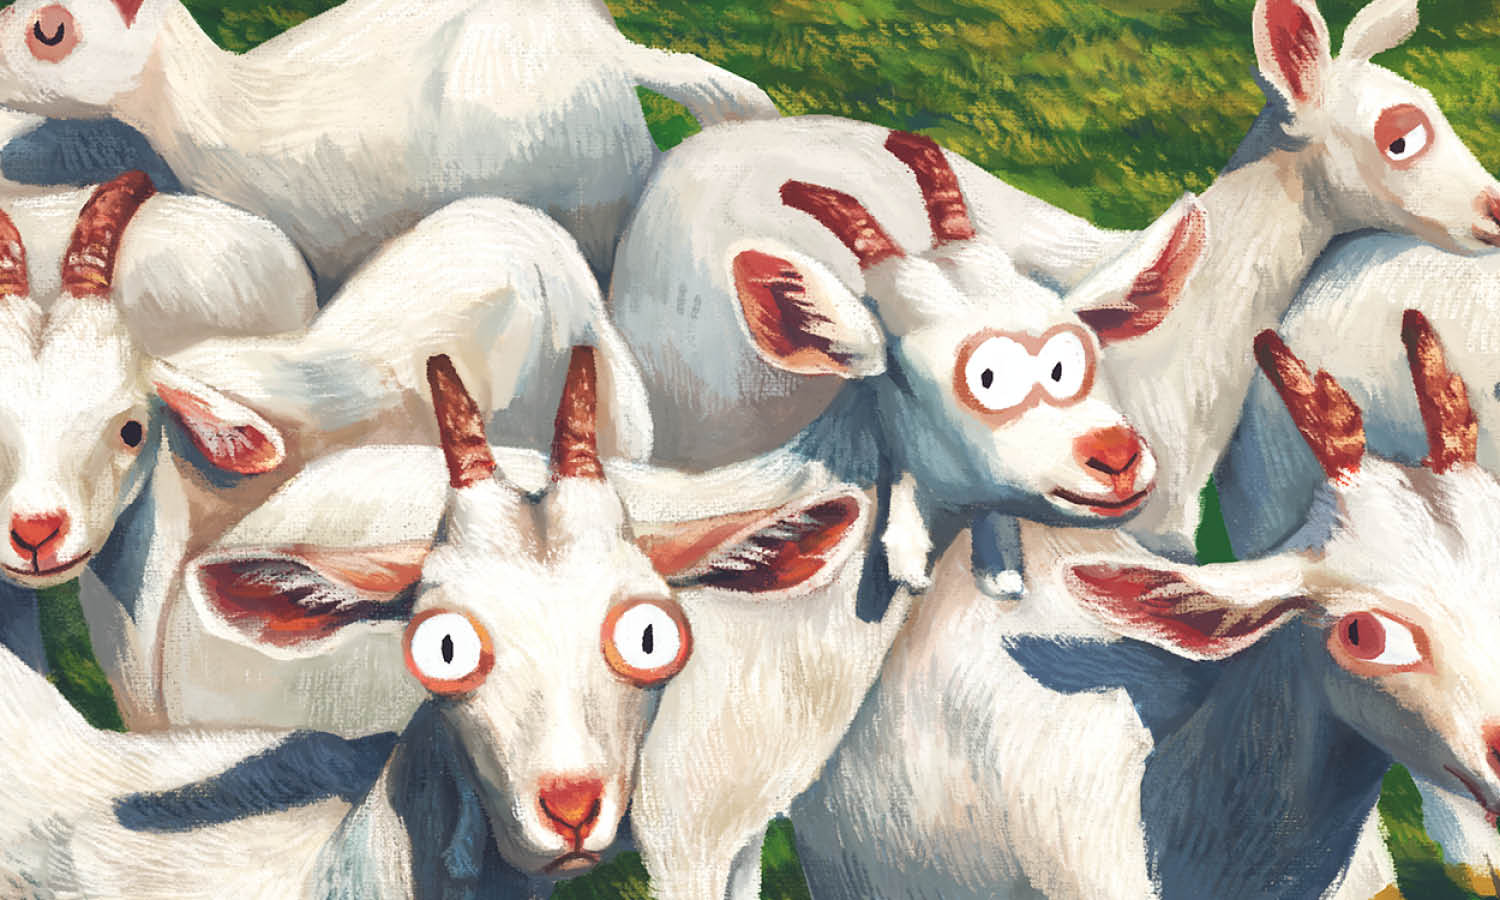 30 Best Goat Illustration Ideas You Should Check